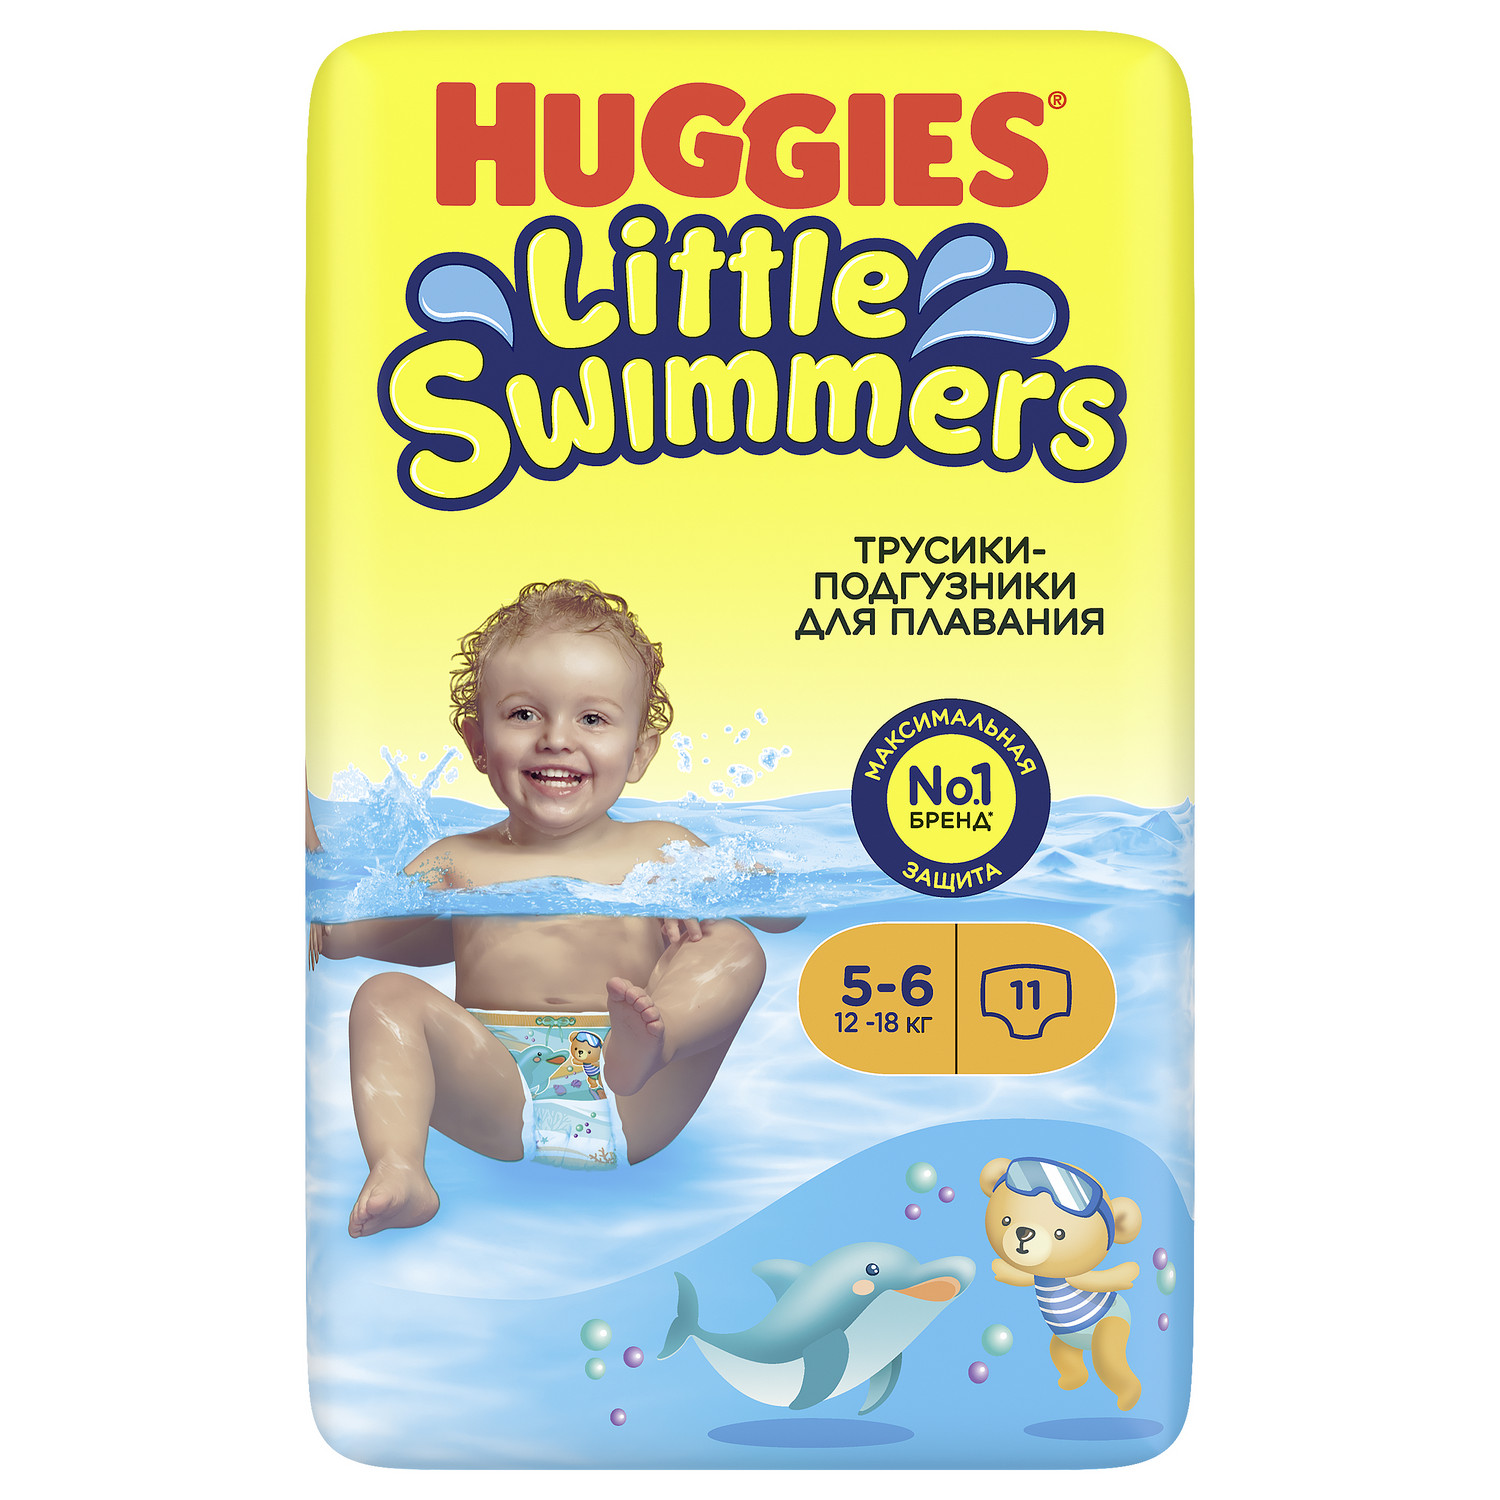 Подгузники-трусики для плавания Huggies Little Swimmers 5-6 12-18кг 11шт - фото 3